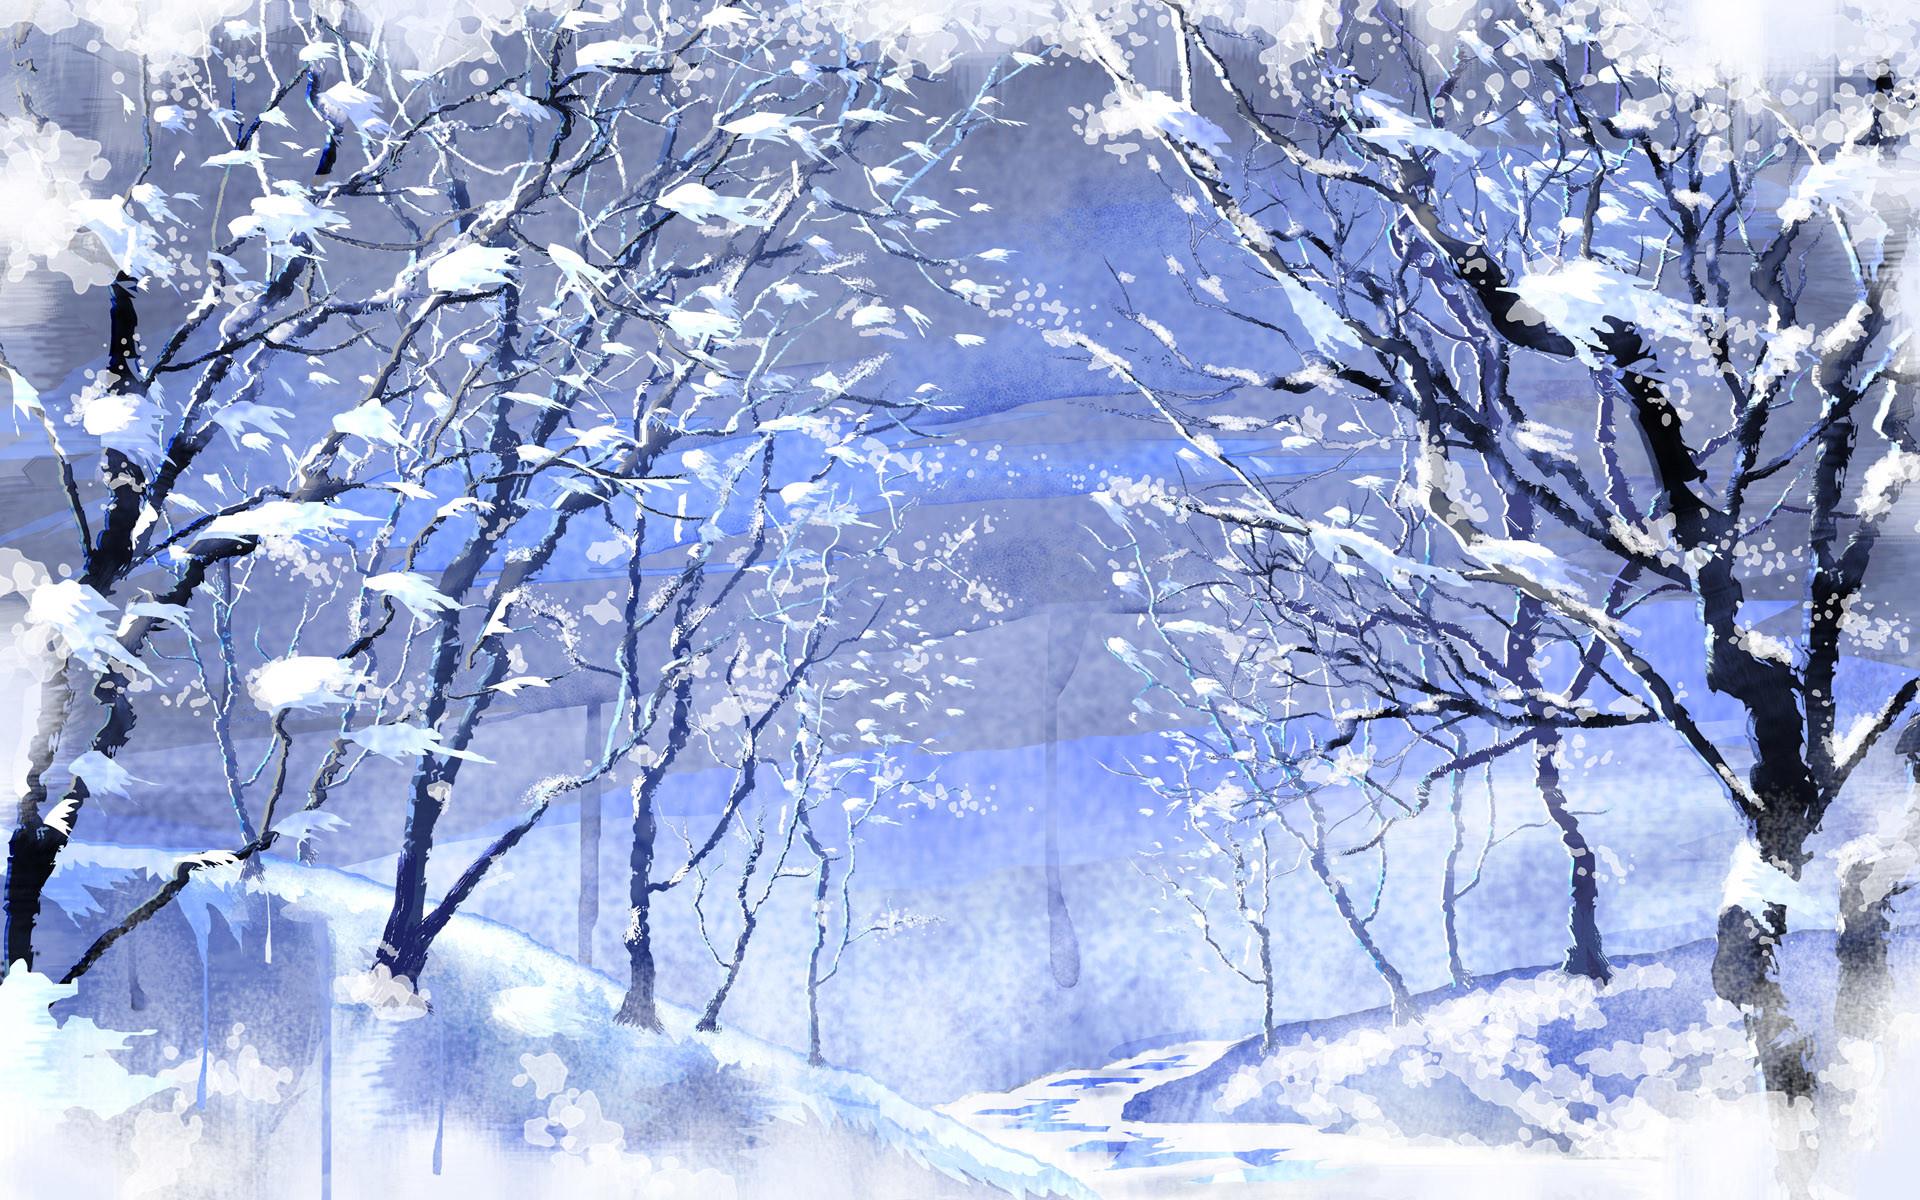 Free Wallpaper Of Winter Scenes IHD2O5G Picseriocom   Picseriocom